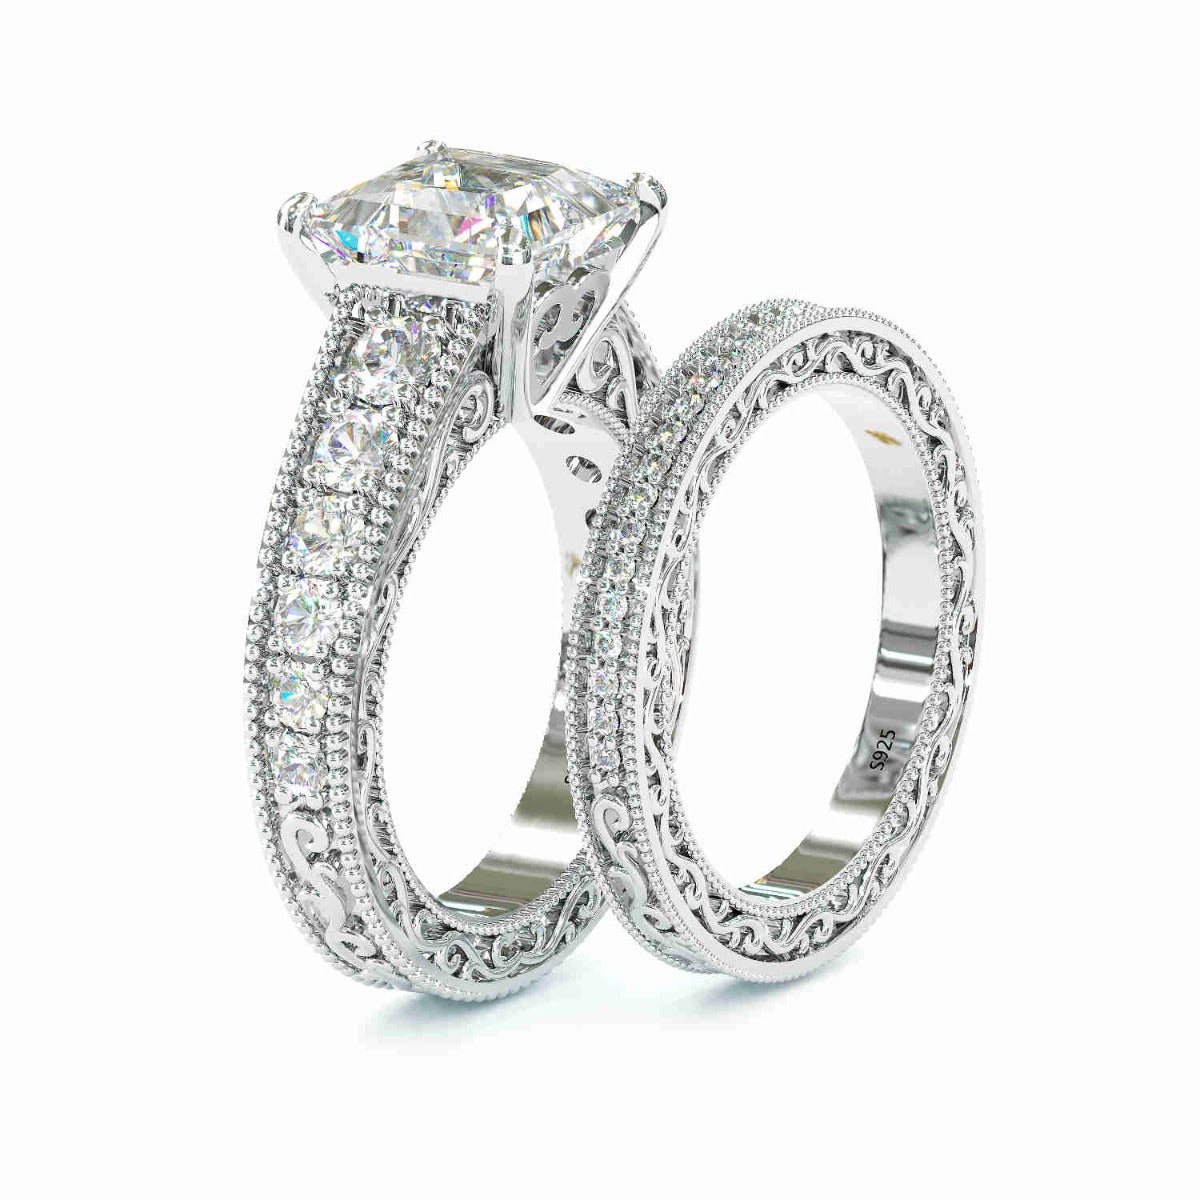 Jorrio handmade princess cut sterling silver classic wedding ring bridal set